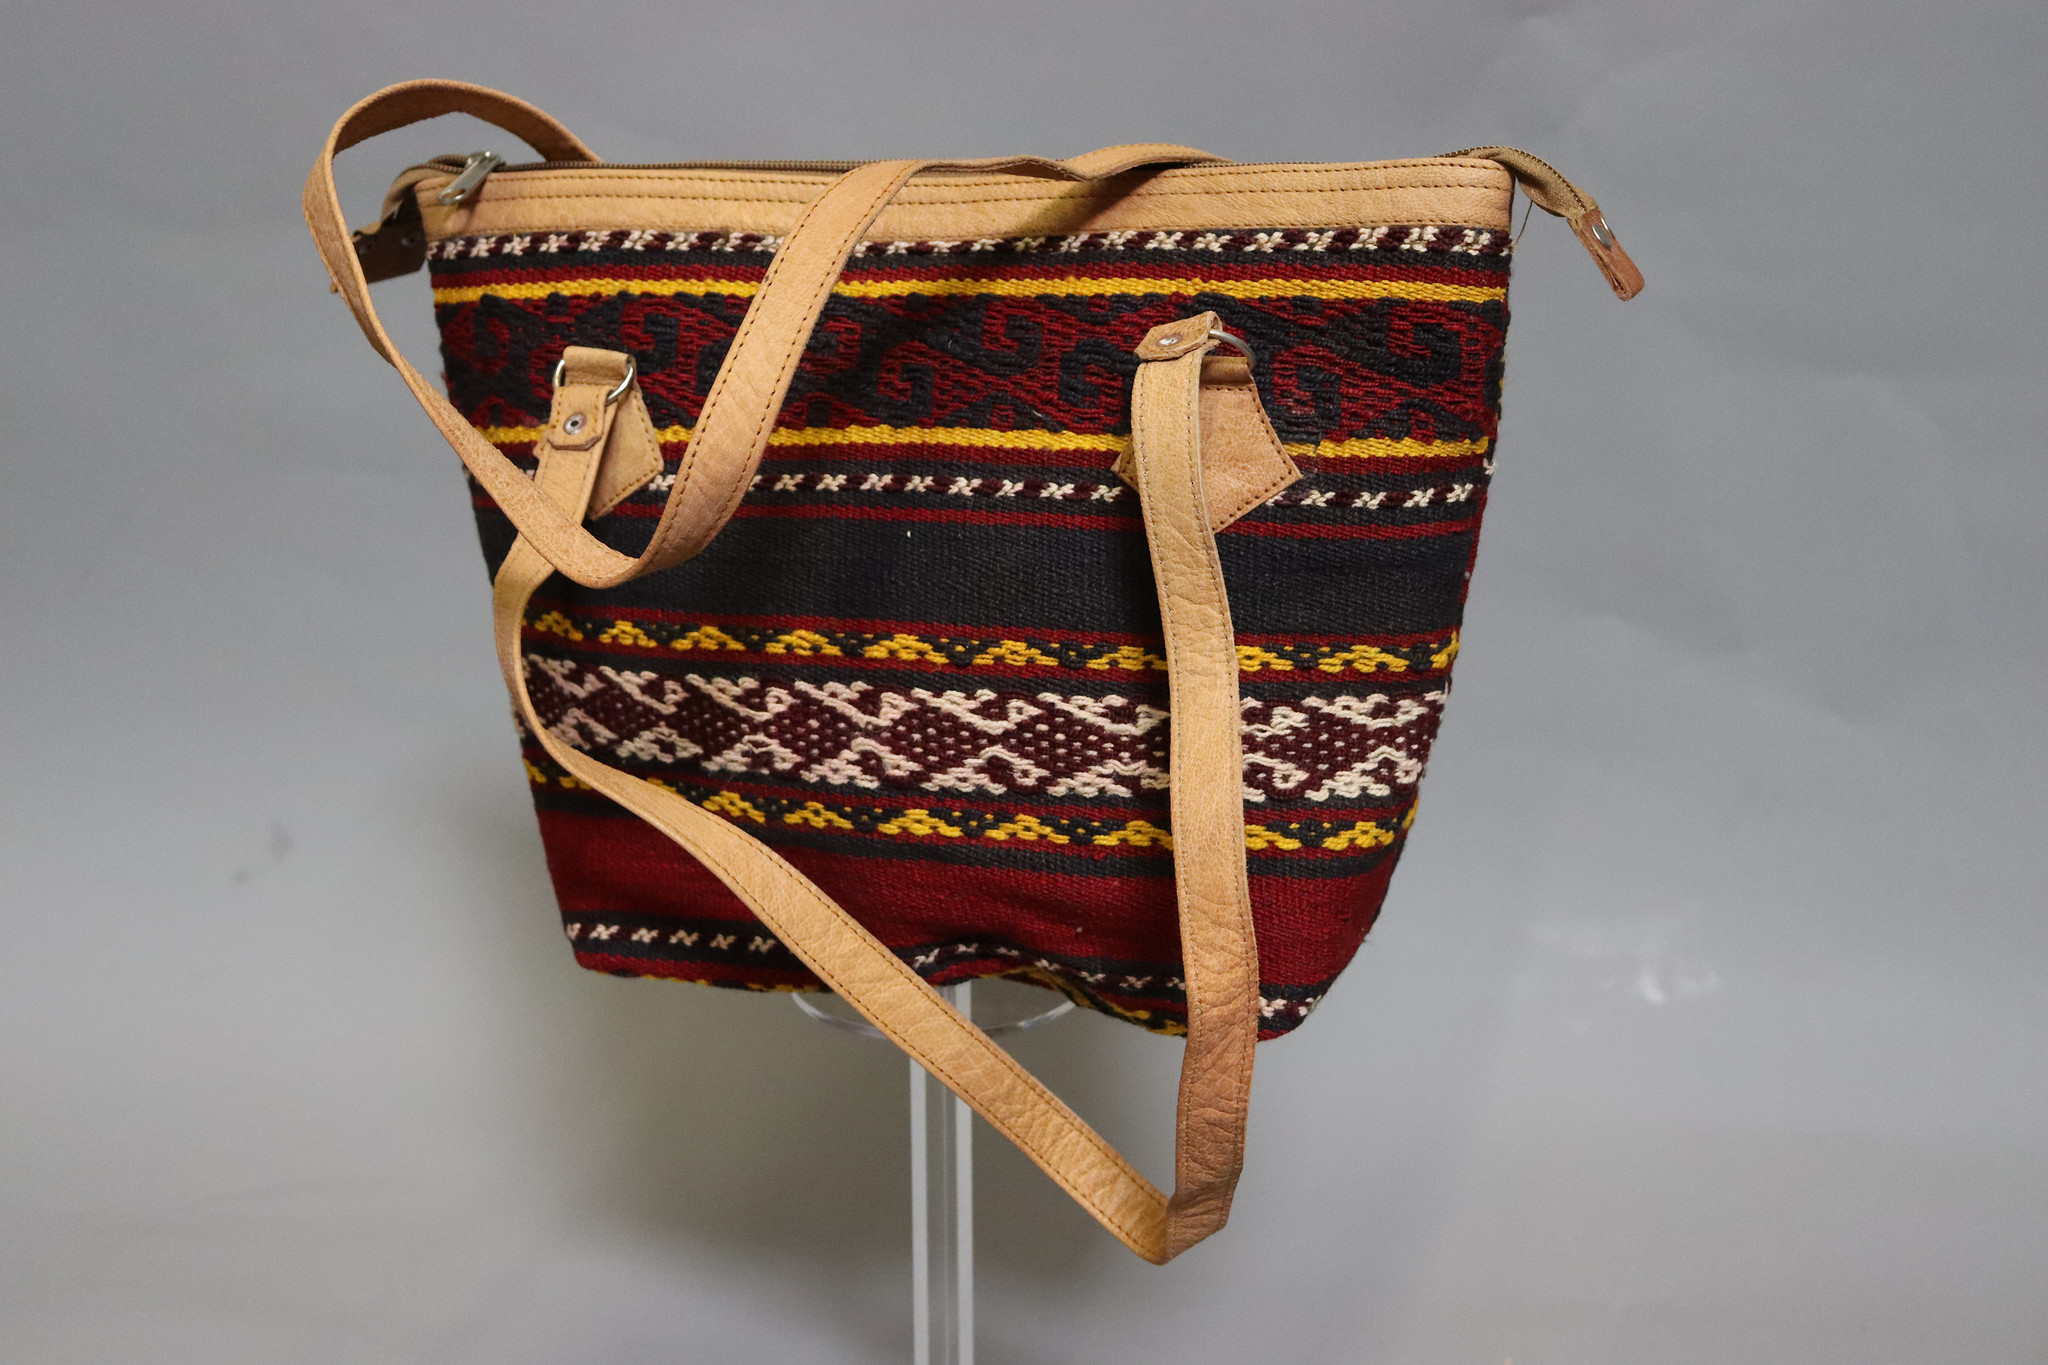 Rare Handmade Leather and kilim Women's Shoulder Bag handbag shopper from Kabul Afghanistan No:23-1